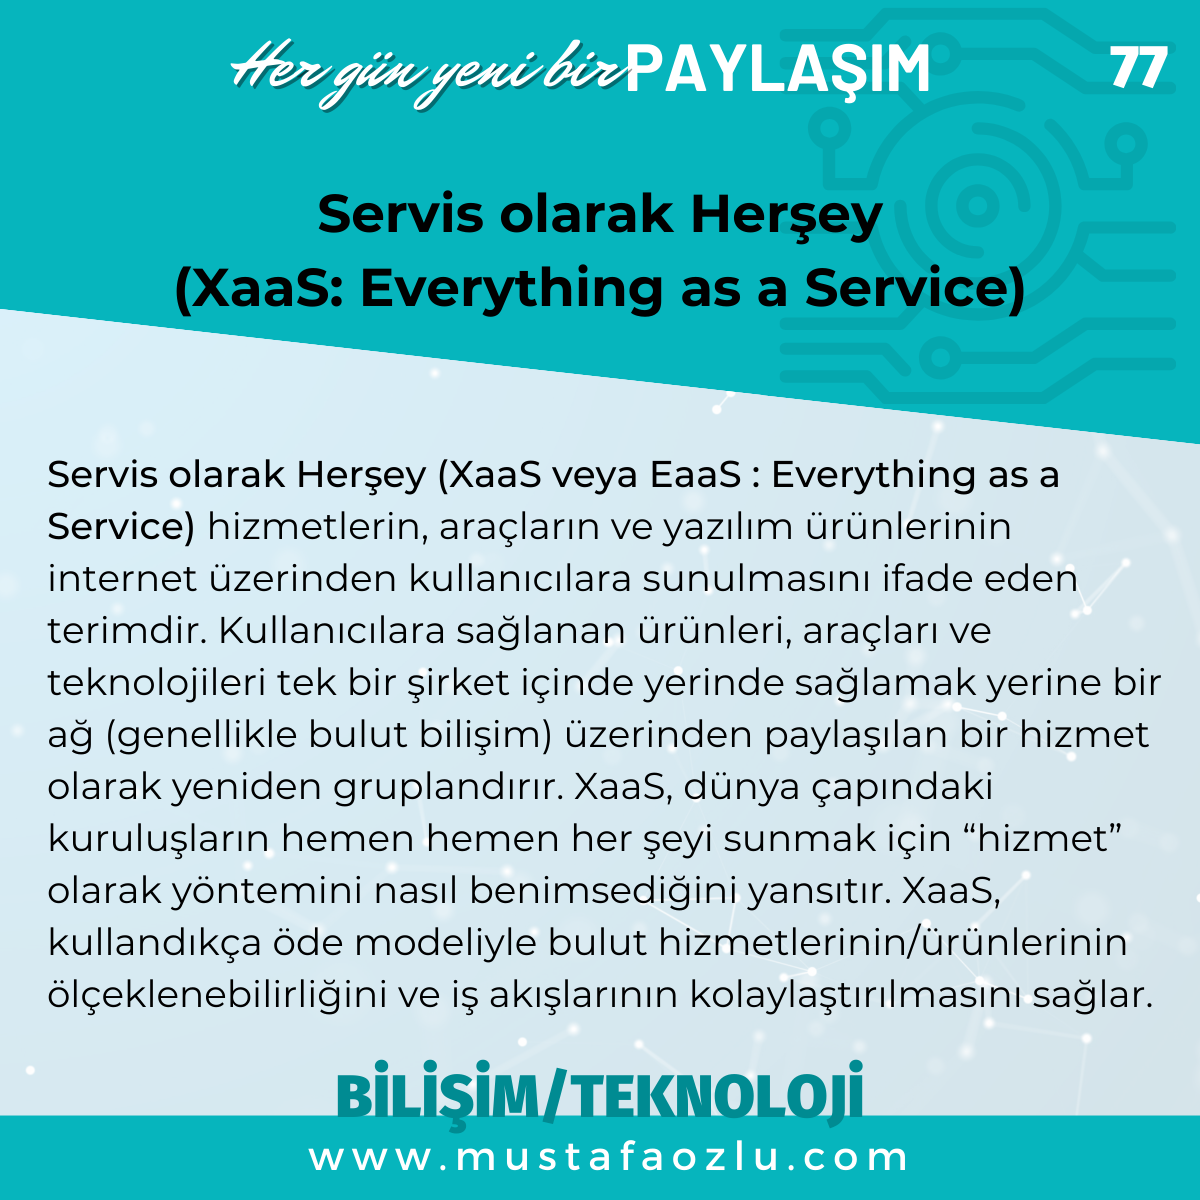 Servis olarak Herşey
(XaaS: Everything as a Service) - Mustafa ÖZLÜ